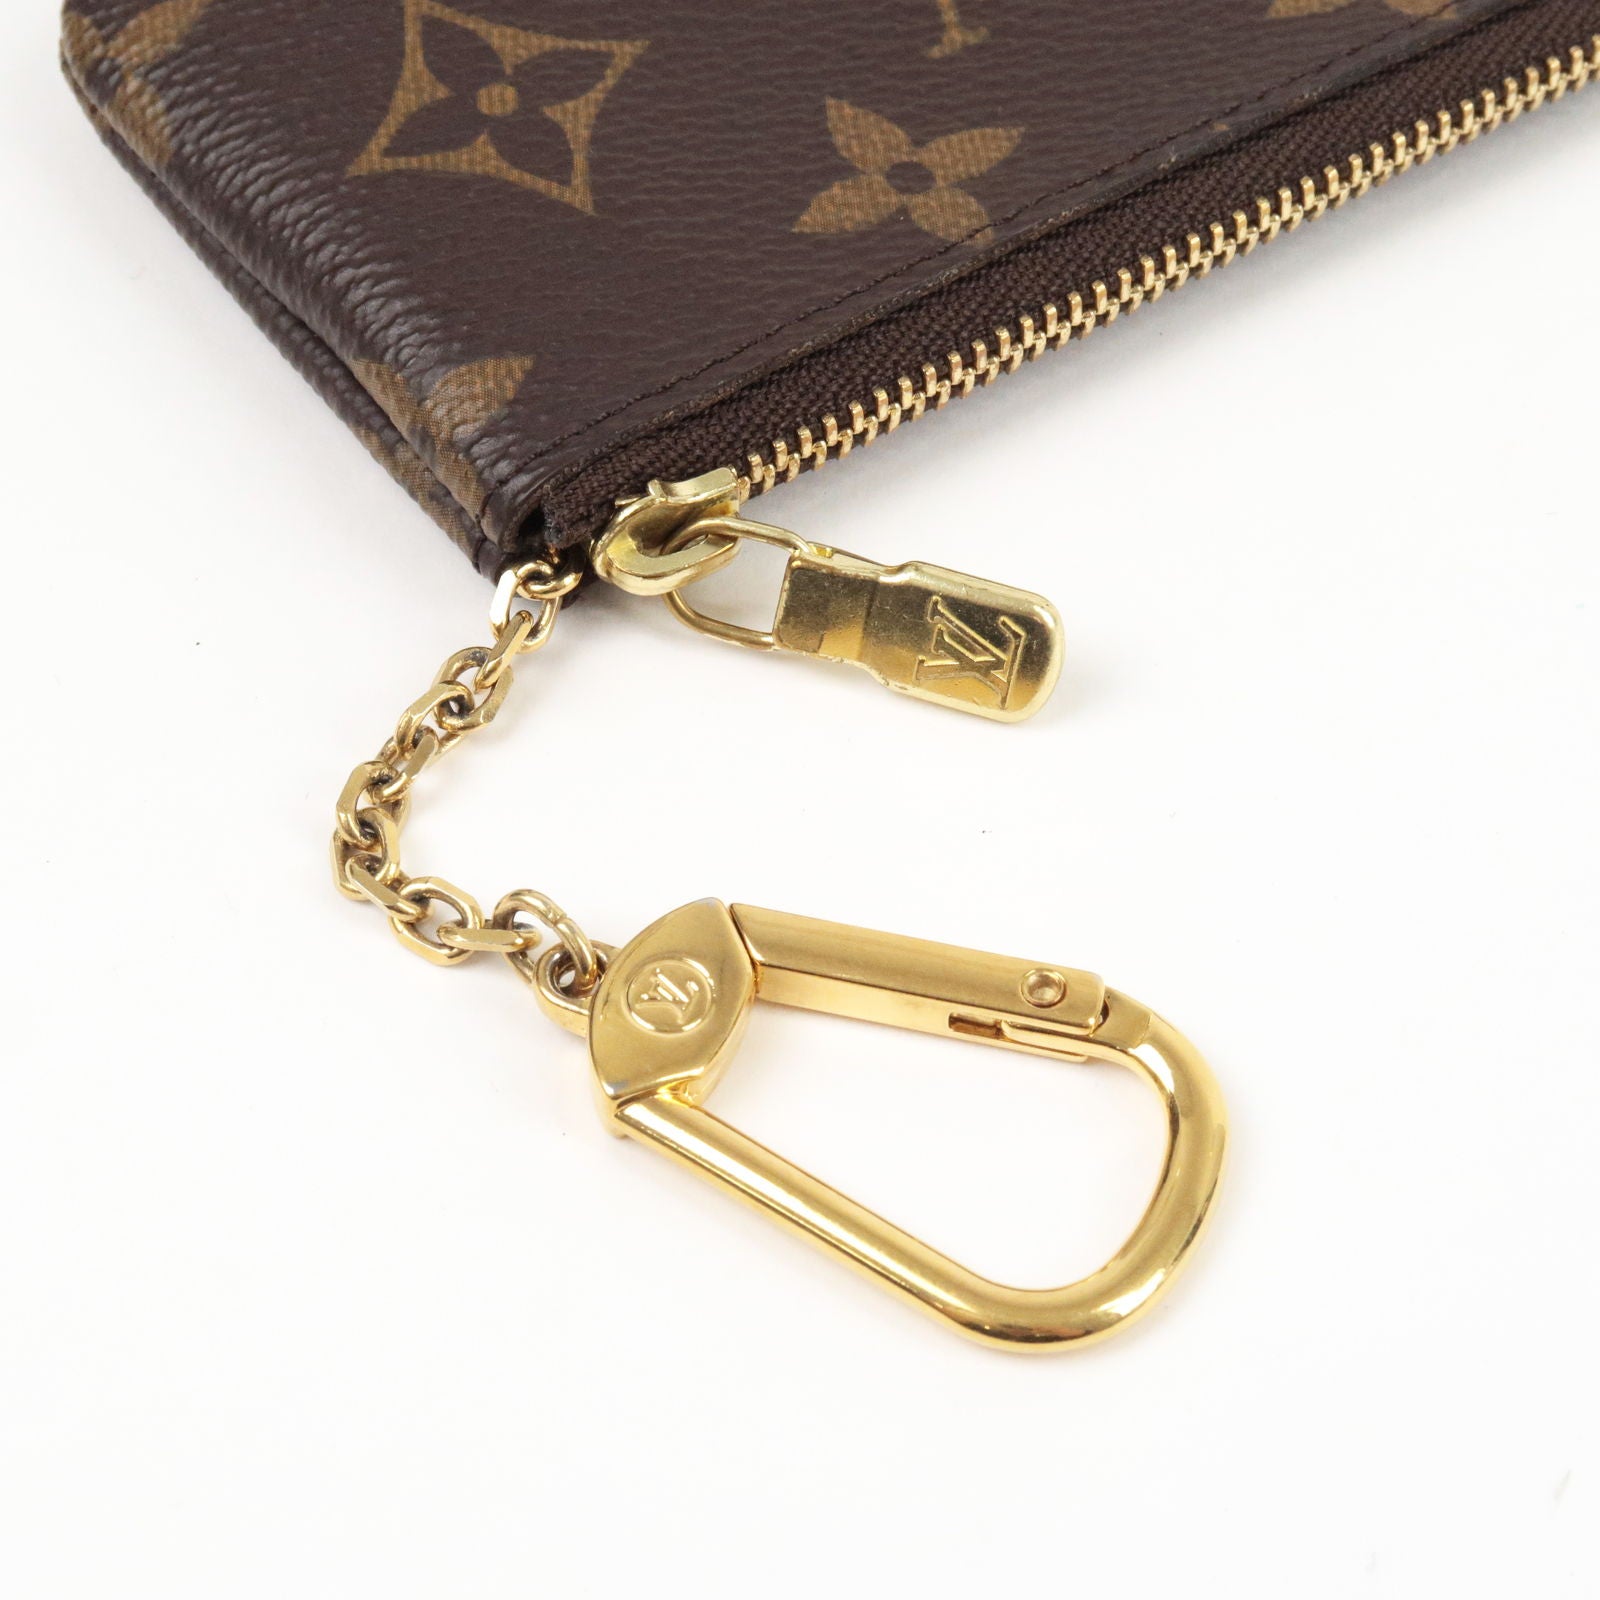 louis key chain wallet leather